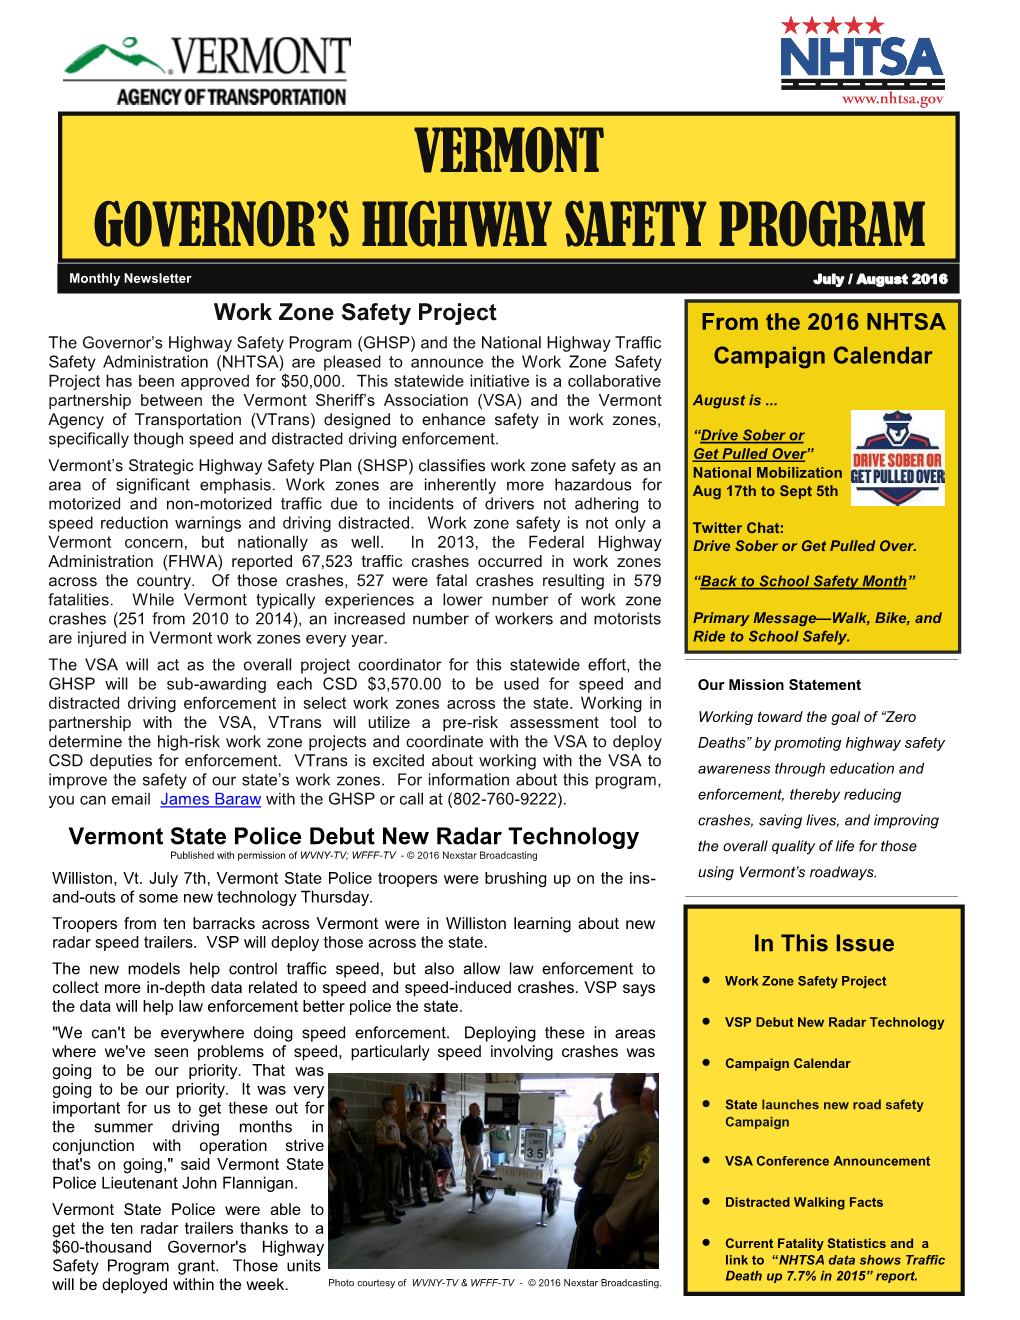 Vermont Governor's Highway Safety Program